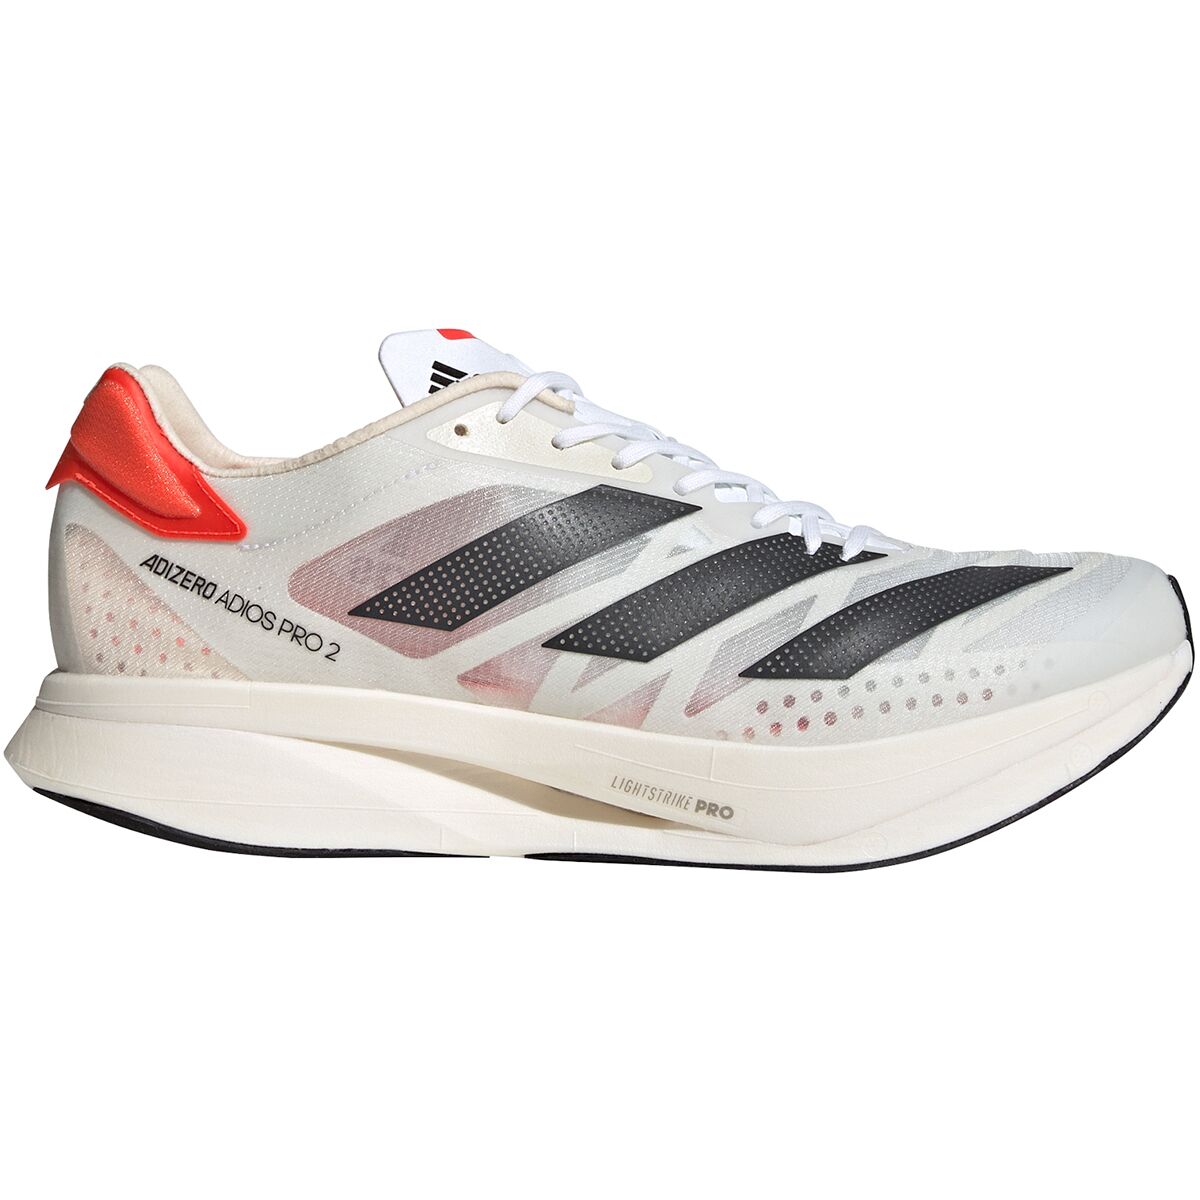 Adidas Adizero Adios Pro 2 Running Shoe - Men's